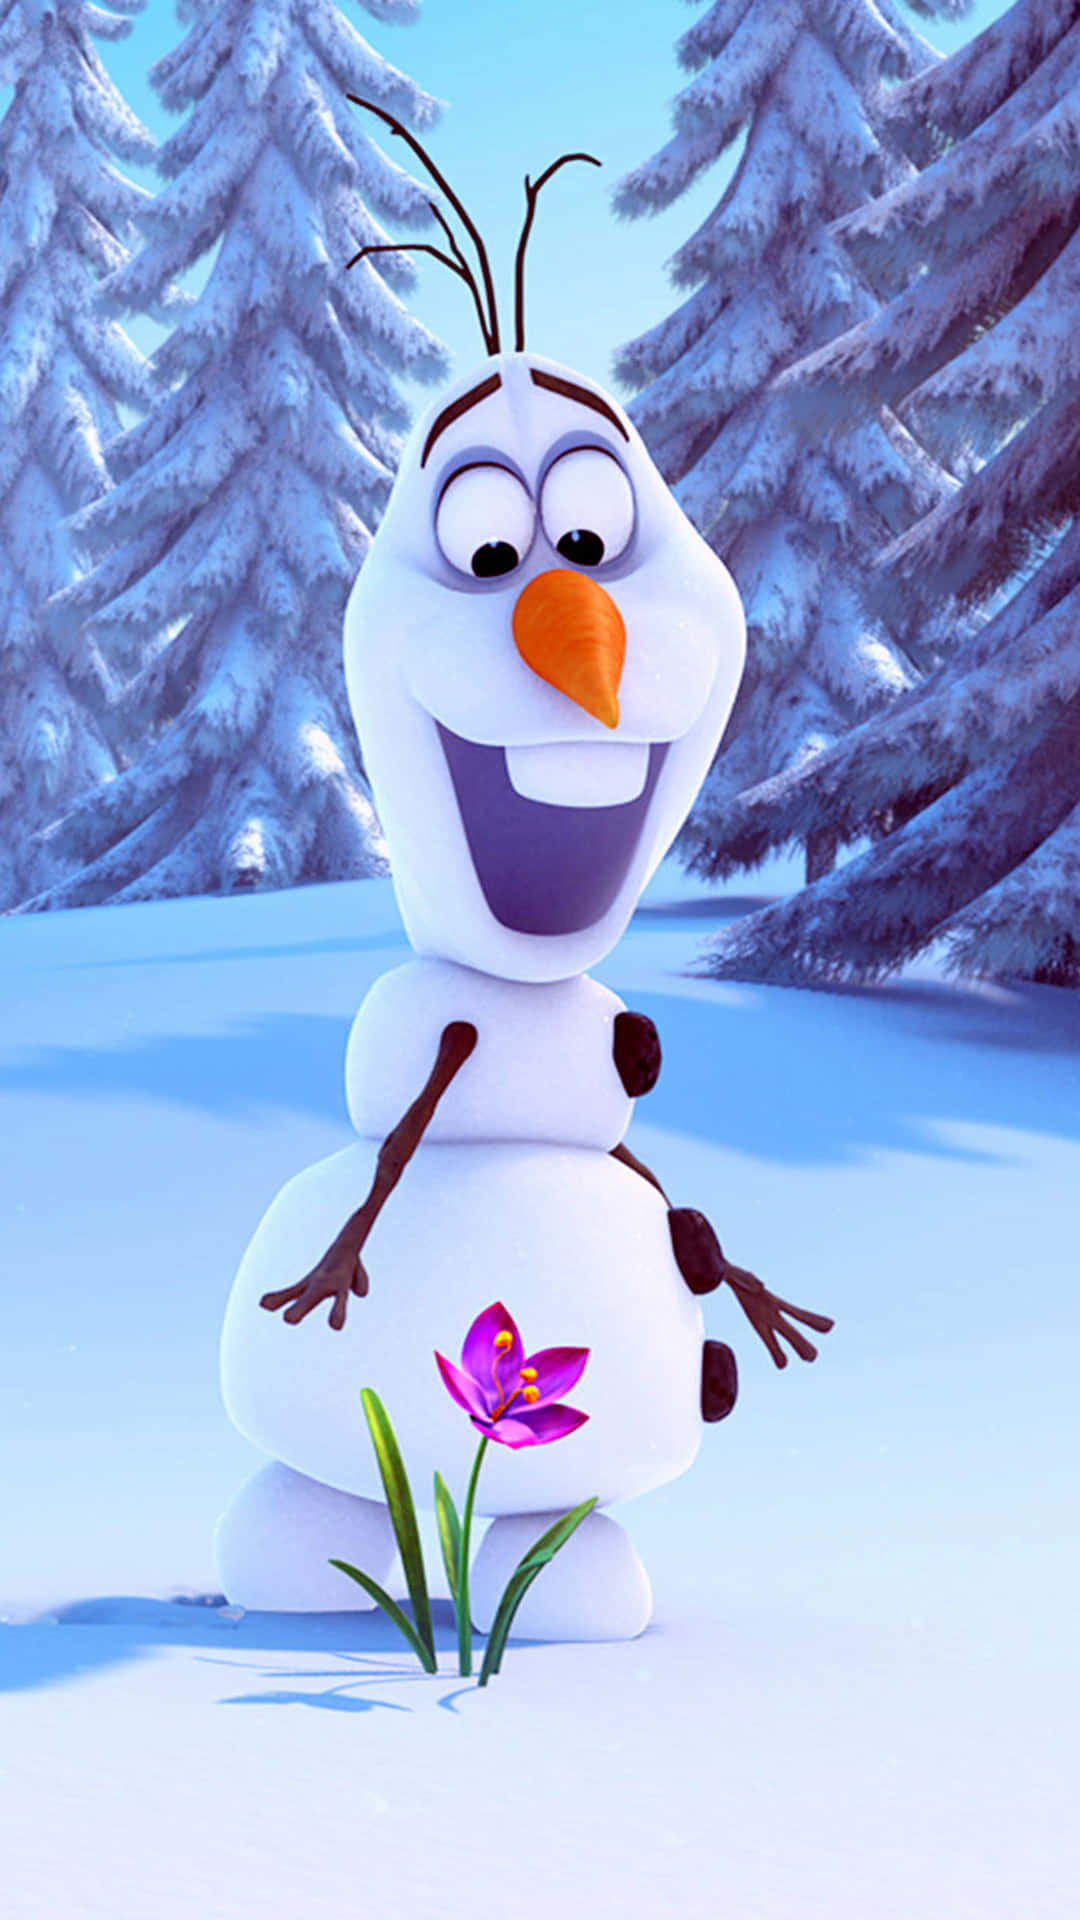 Cheerful Snowman Winter Scene.jpg Wallpaper